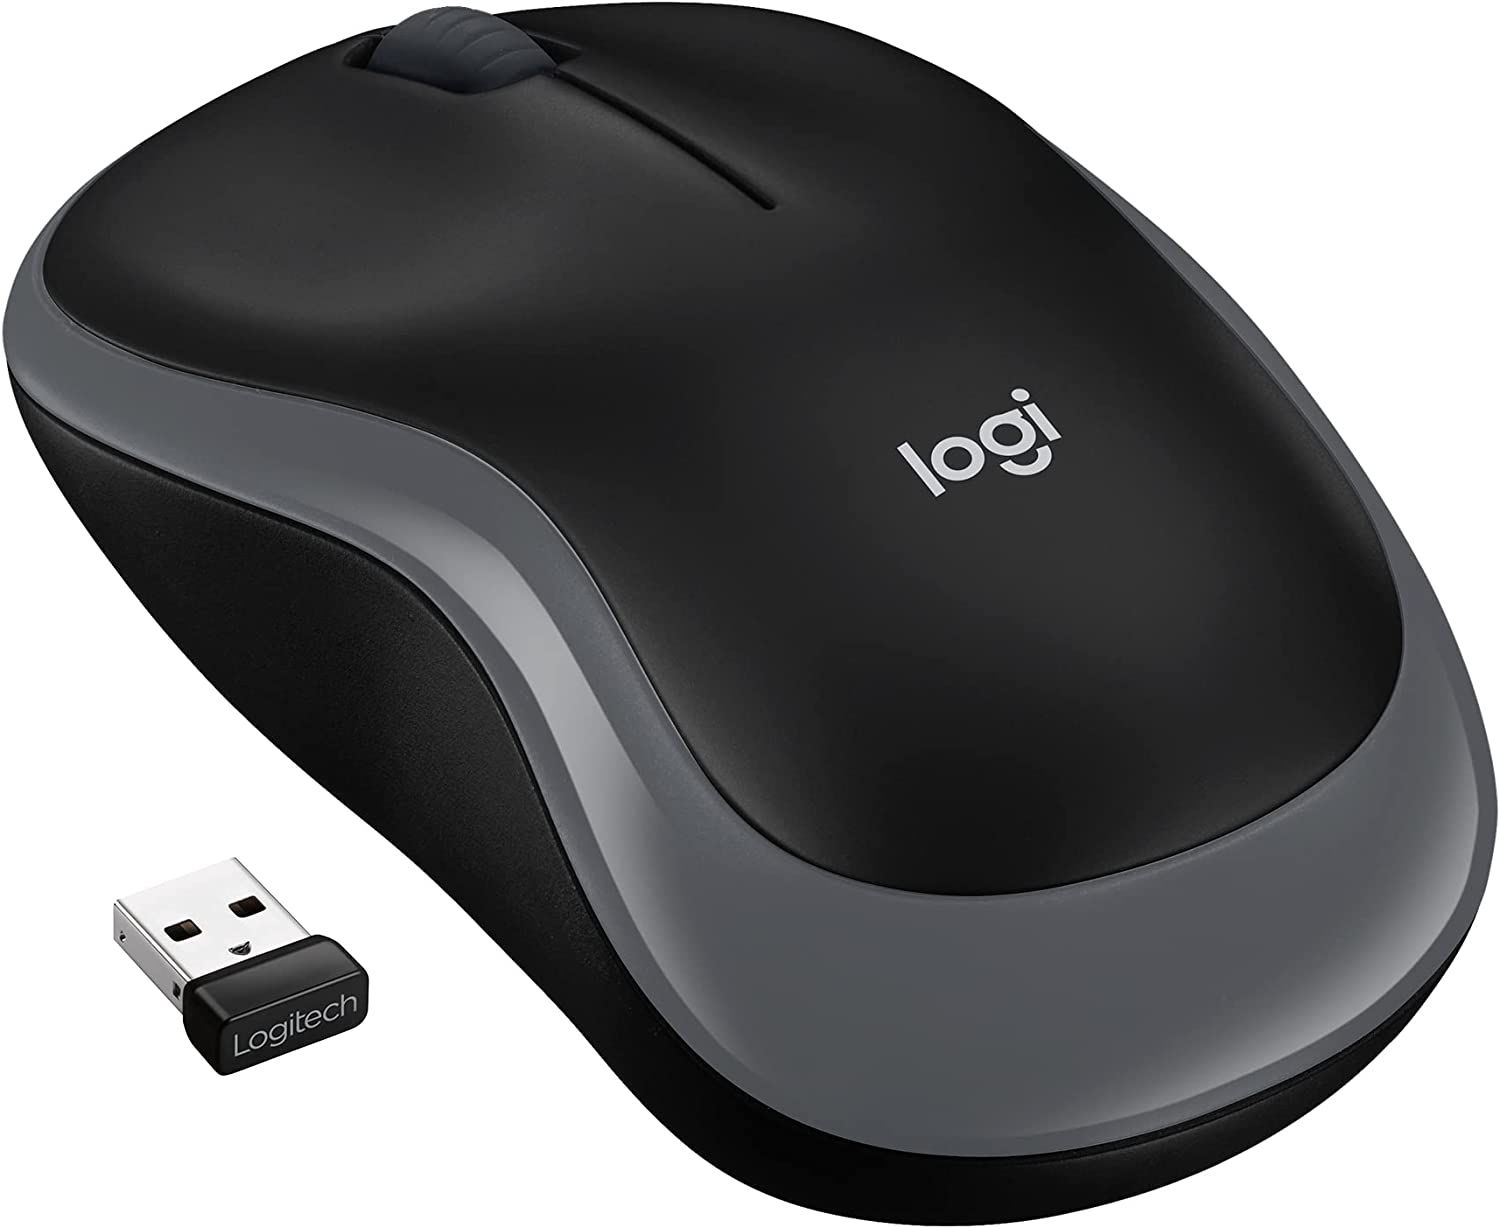  Logitech M185 Wireless Mouse